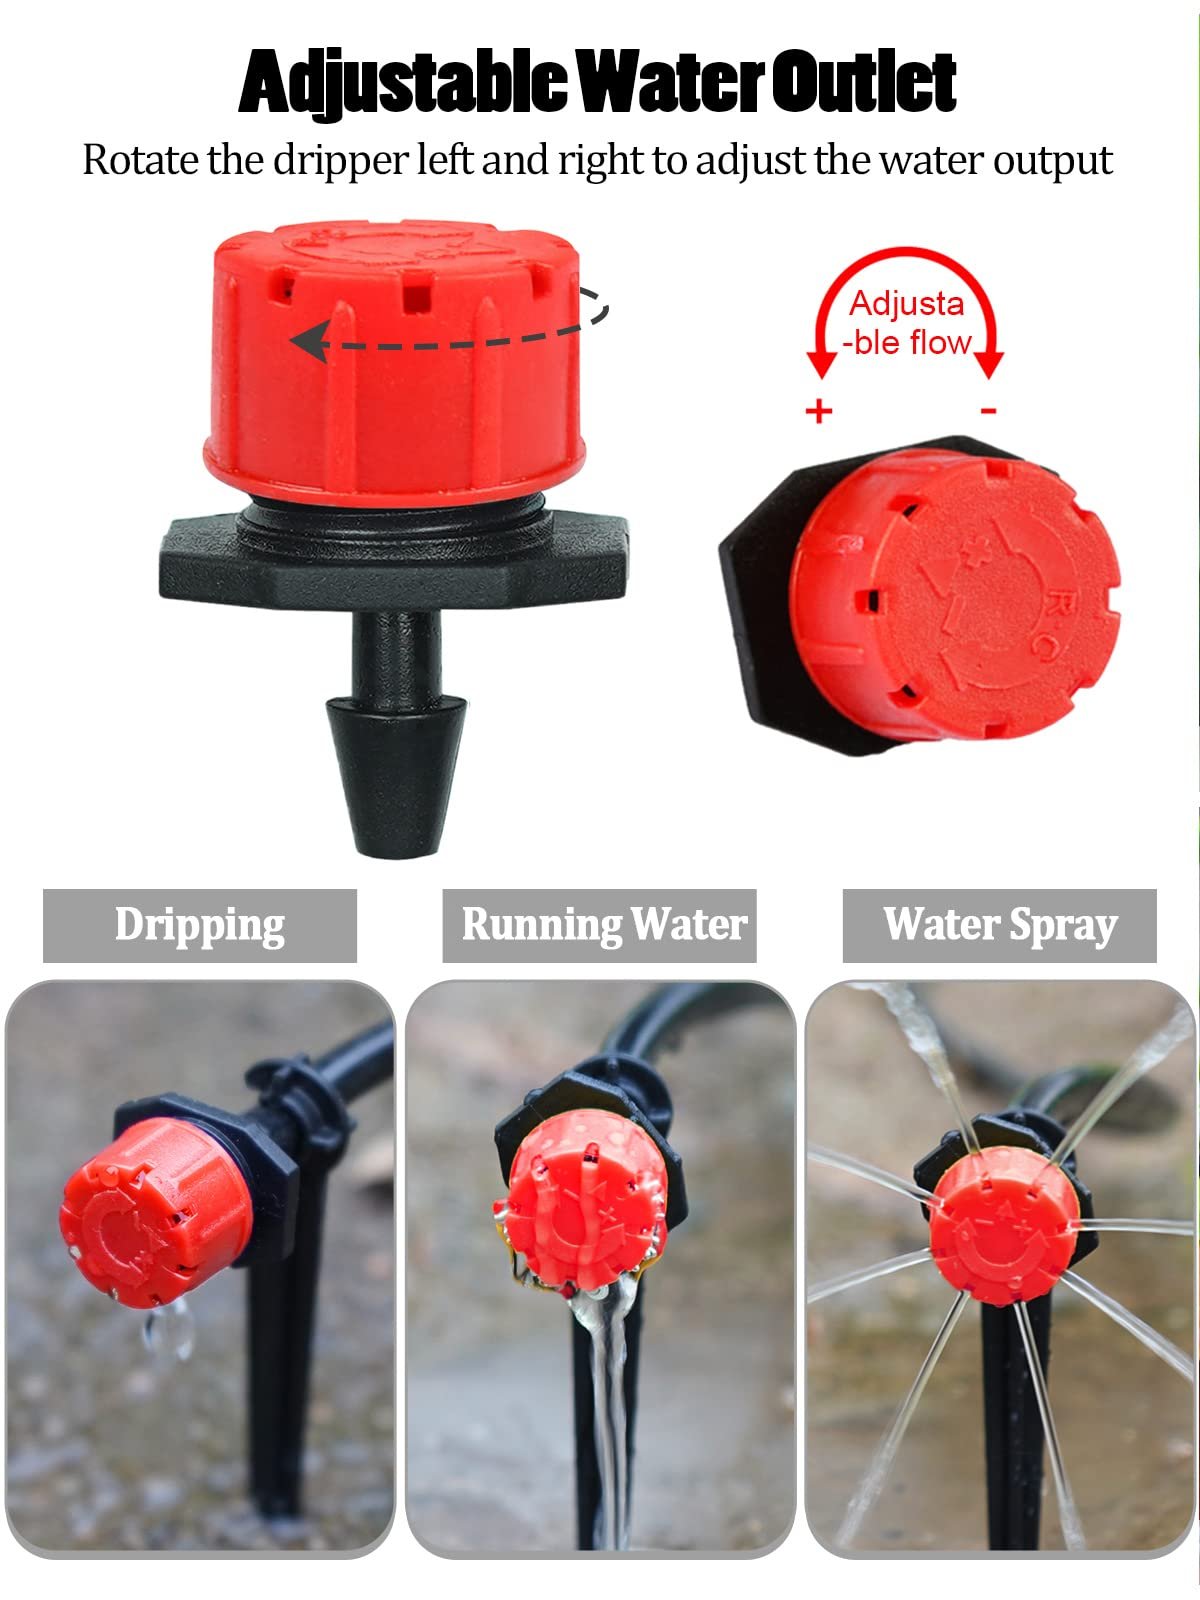 Adjustable Irrigation Drippers